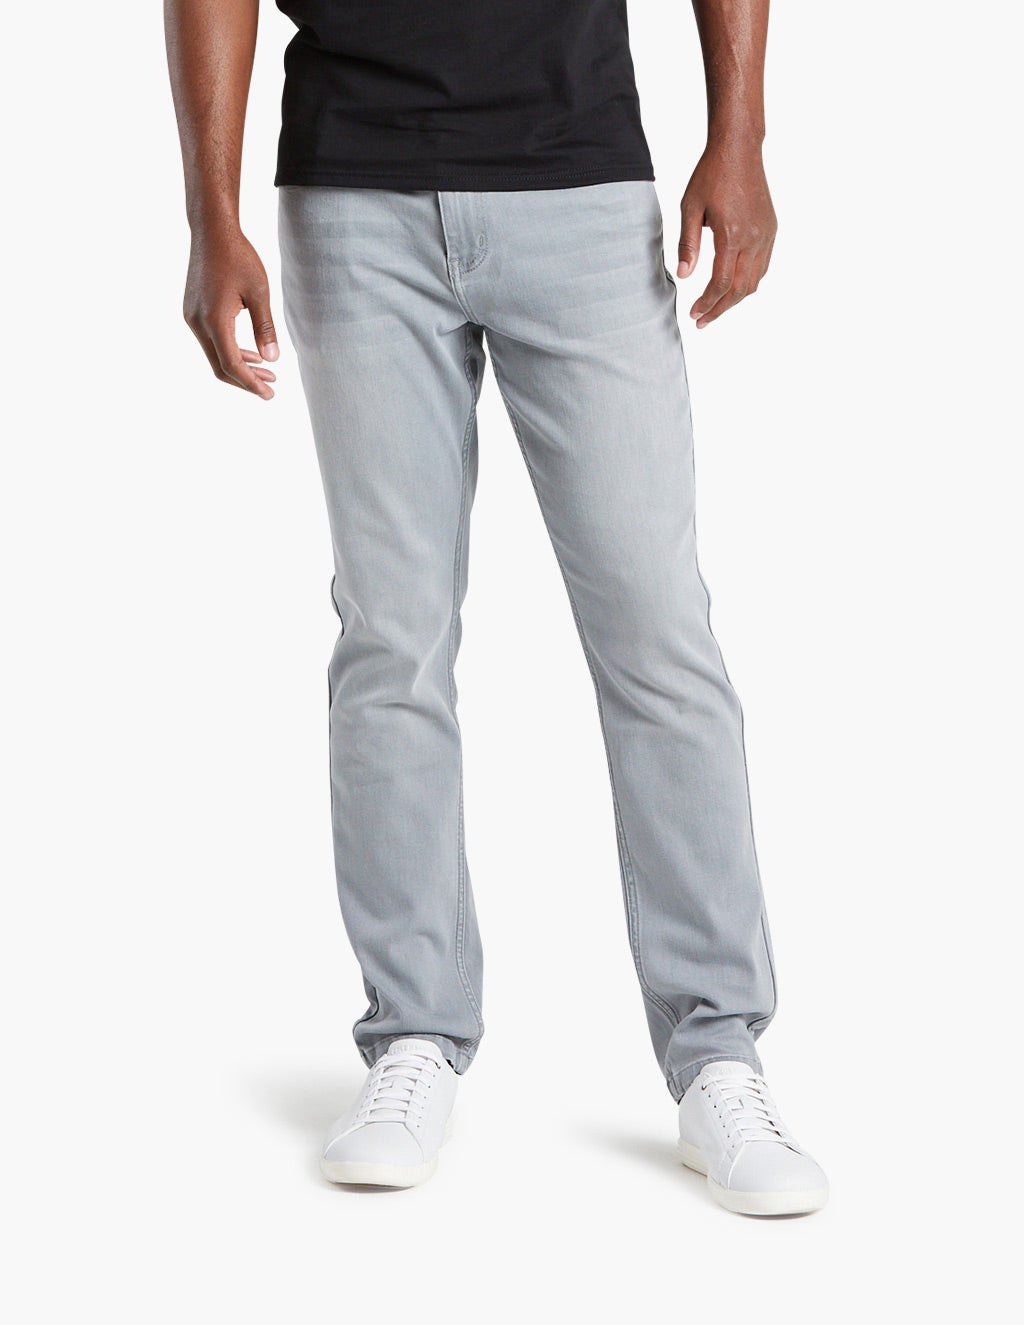 stretch summer jeans for men light gray